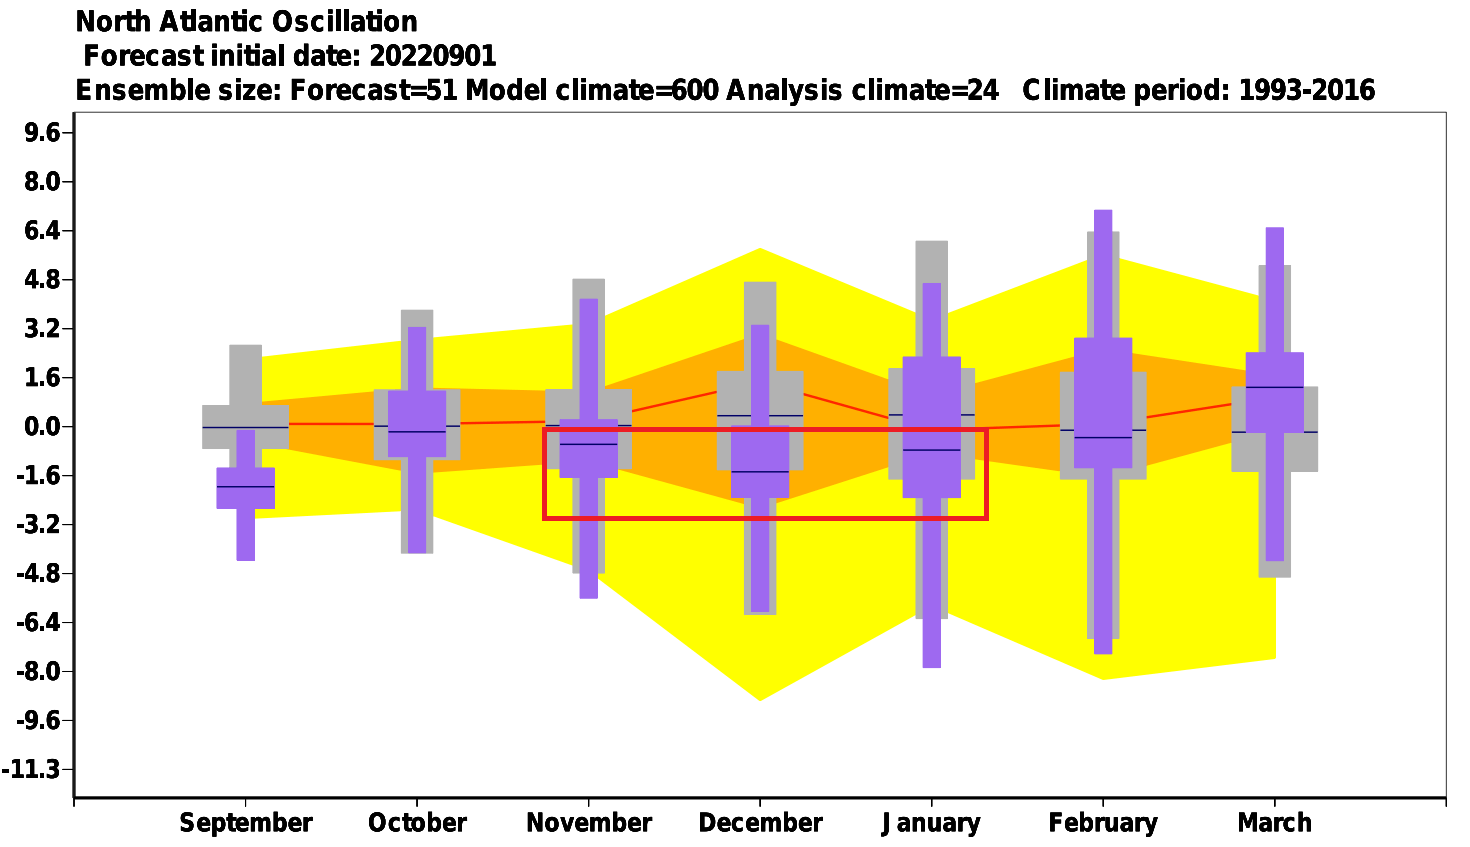 winter-forecast-update-2022-2023-north-atlantic-oscillation-pattern-ecmwf-monthly